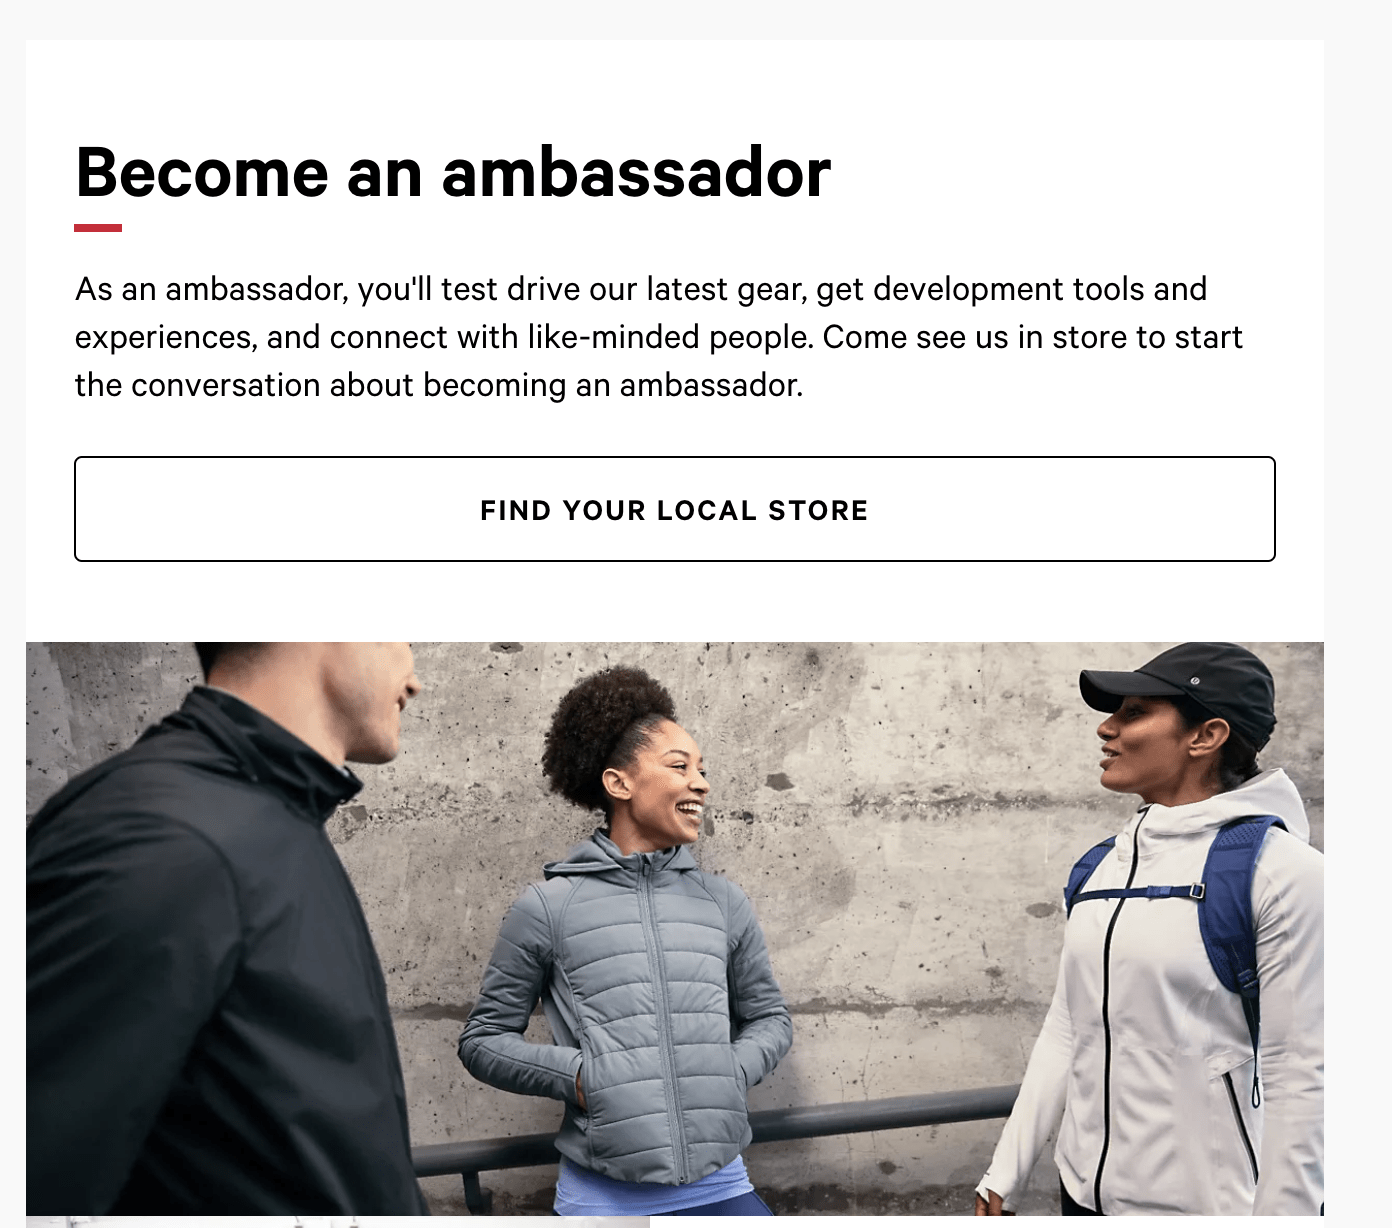 brand ambassador program - How to Start a Brand Ambassador Program for Your Brand - 1